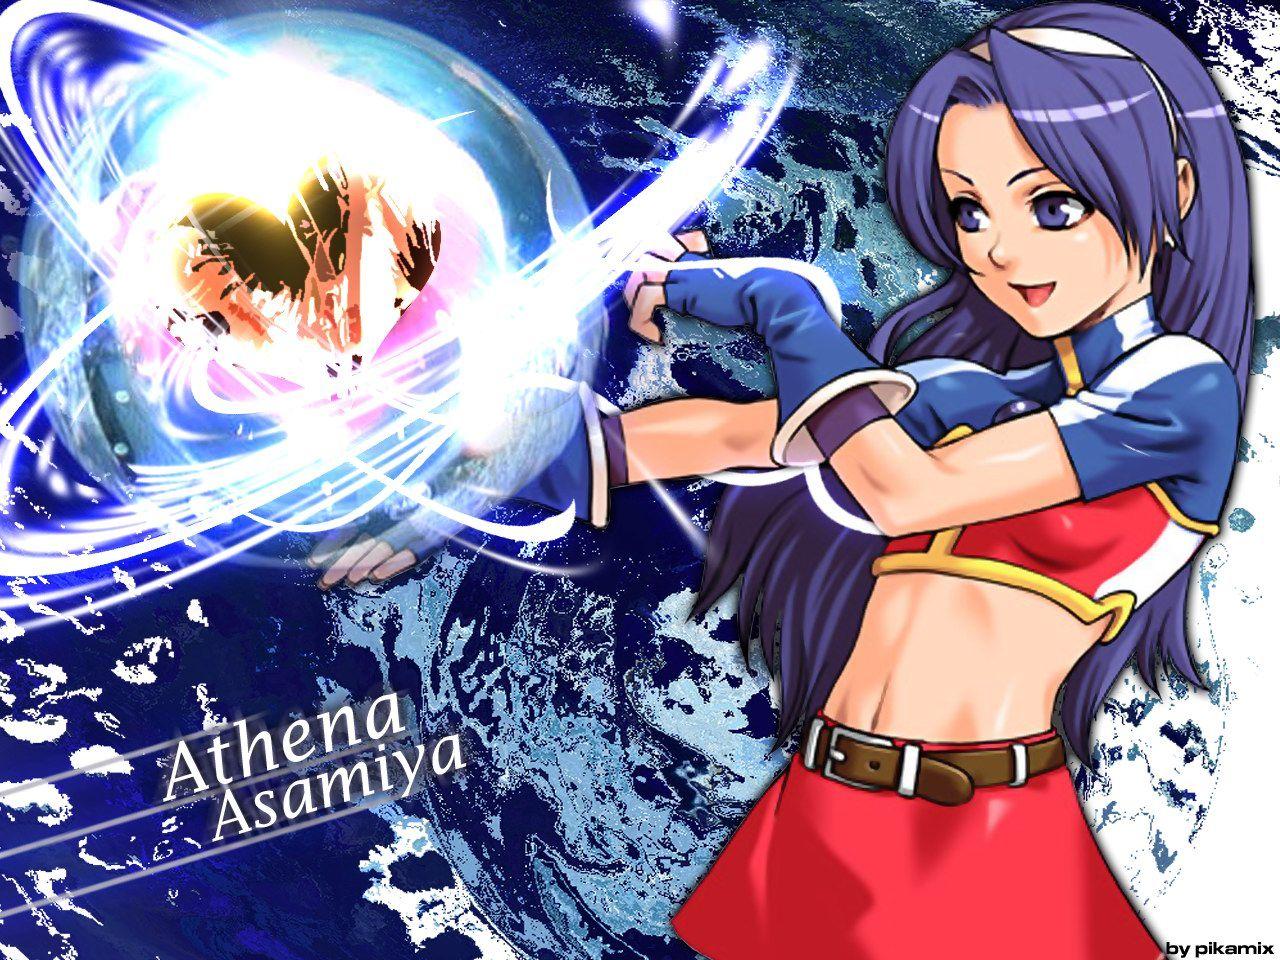 Athena Asamiya Wallpapers - Top Free Athena Asamiya Backgrounds ...